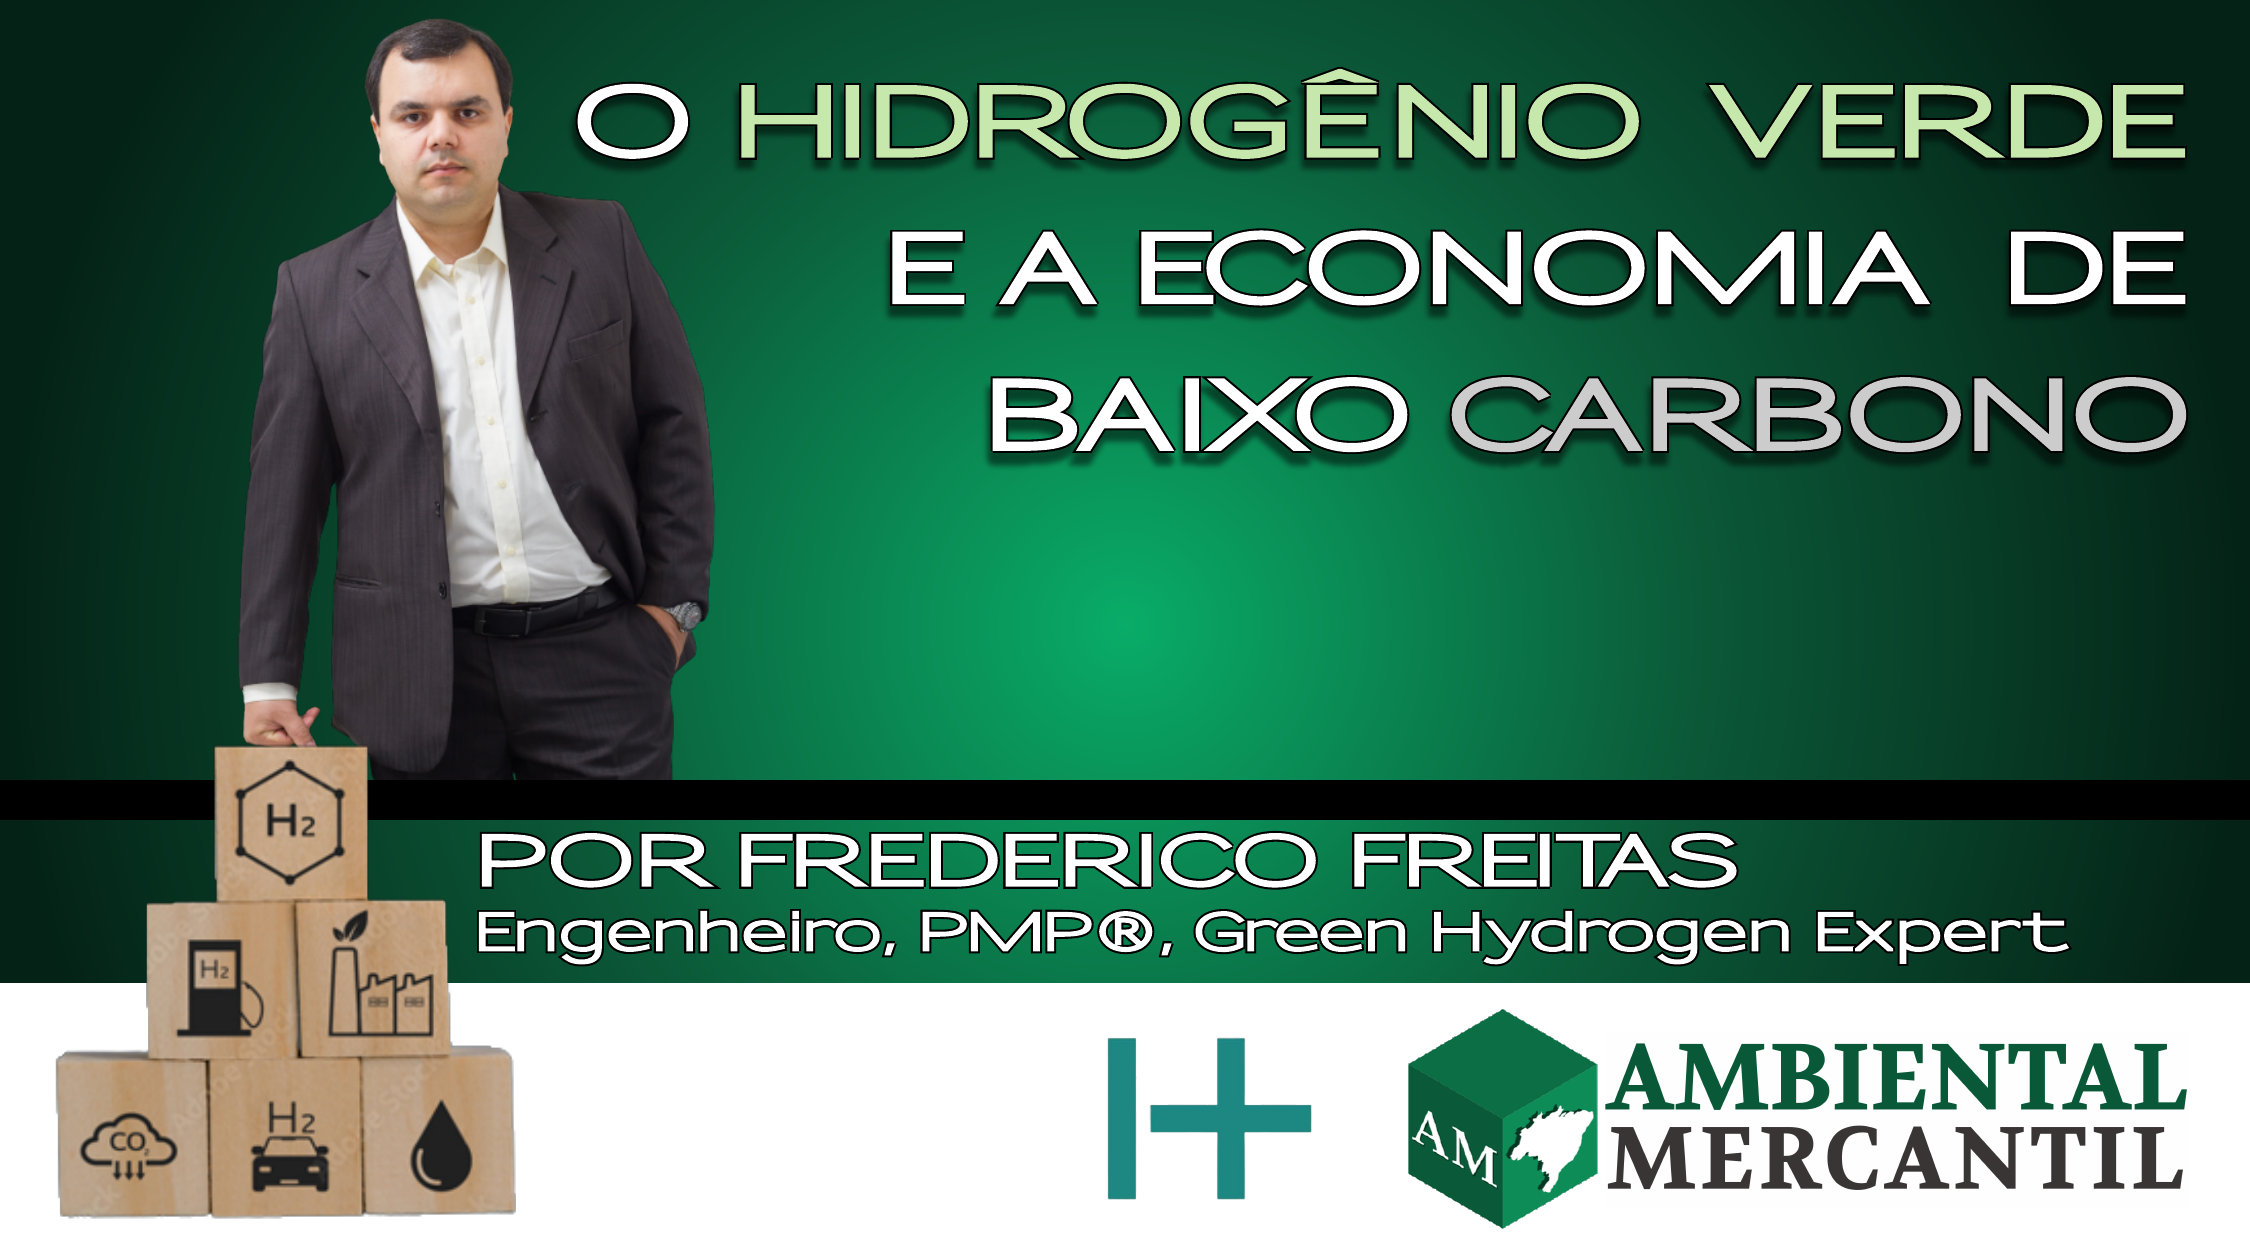 FREDERICO-FREITAS-COLUNISTA-HIDROGENIO-VERDE-BAIXO-CARBONO-AMBIENTAL-MERCANTILv4-540×300-2